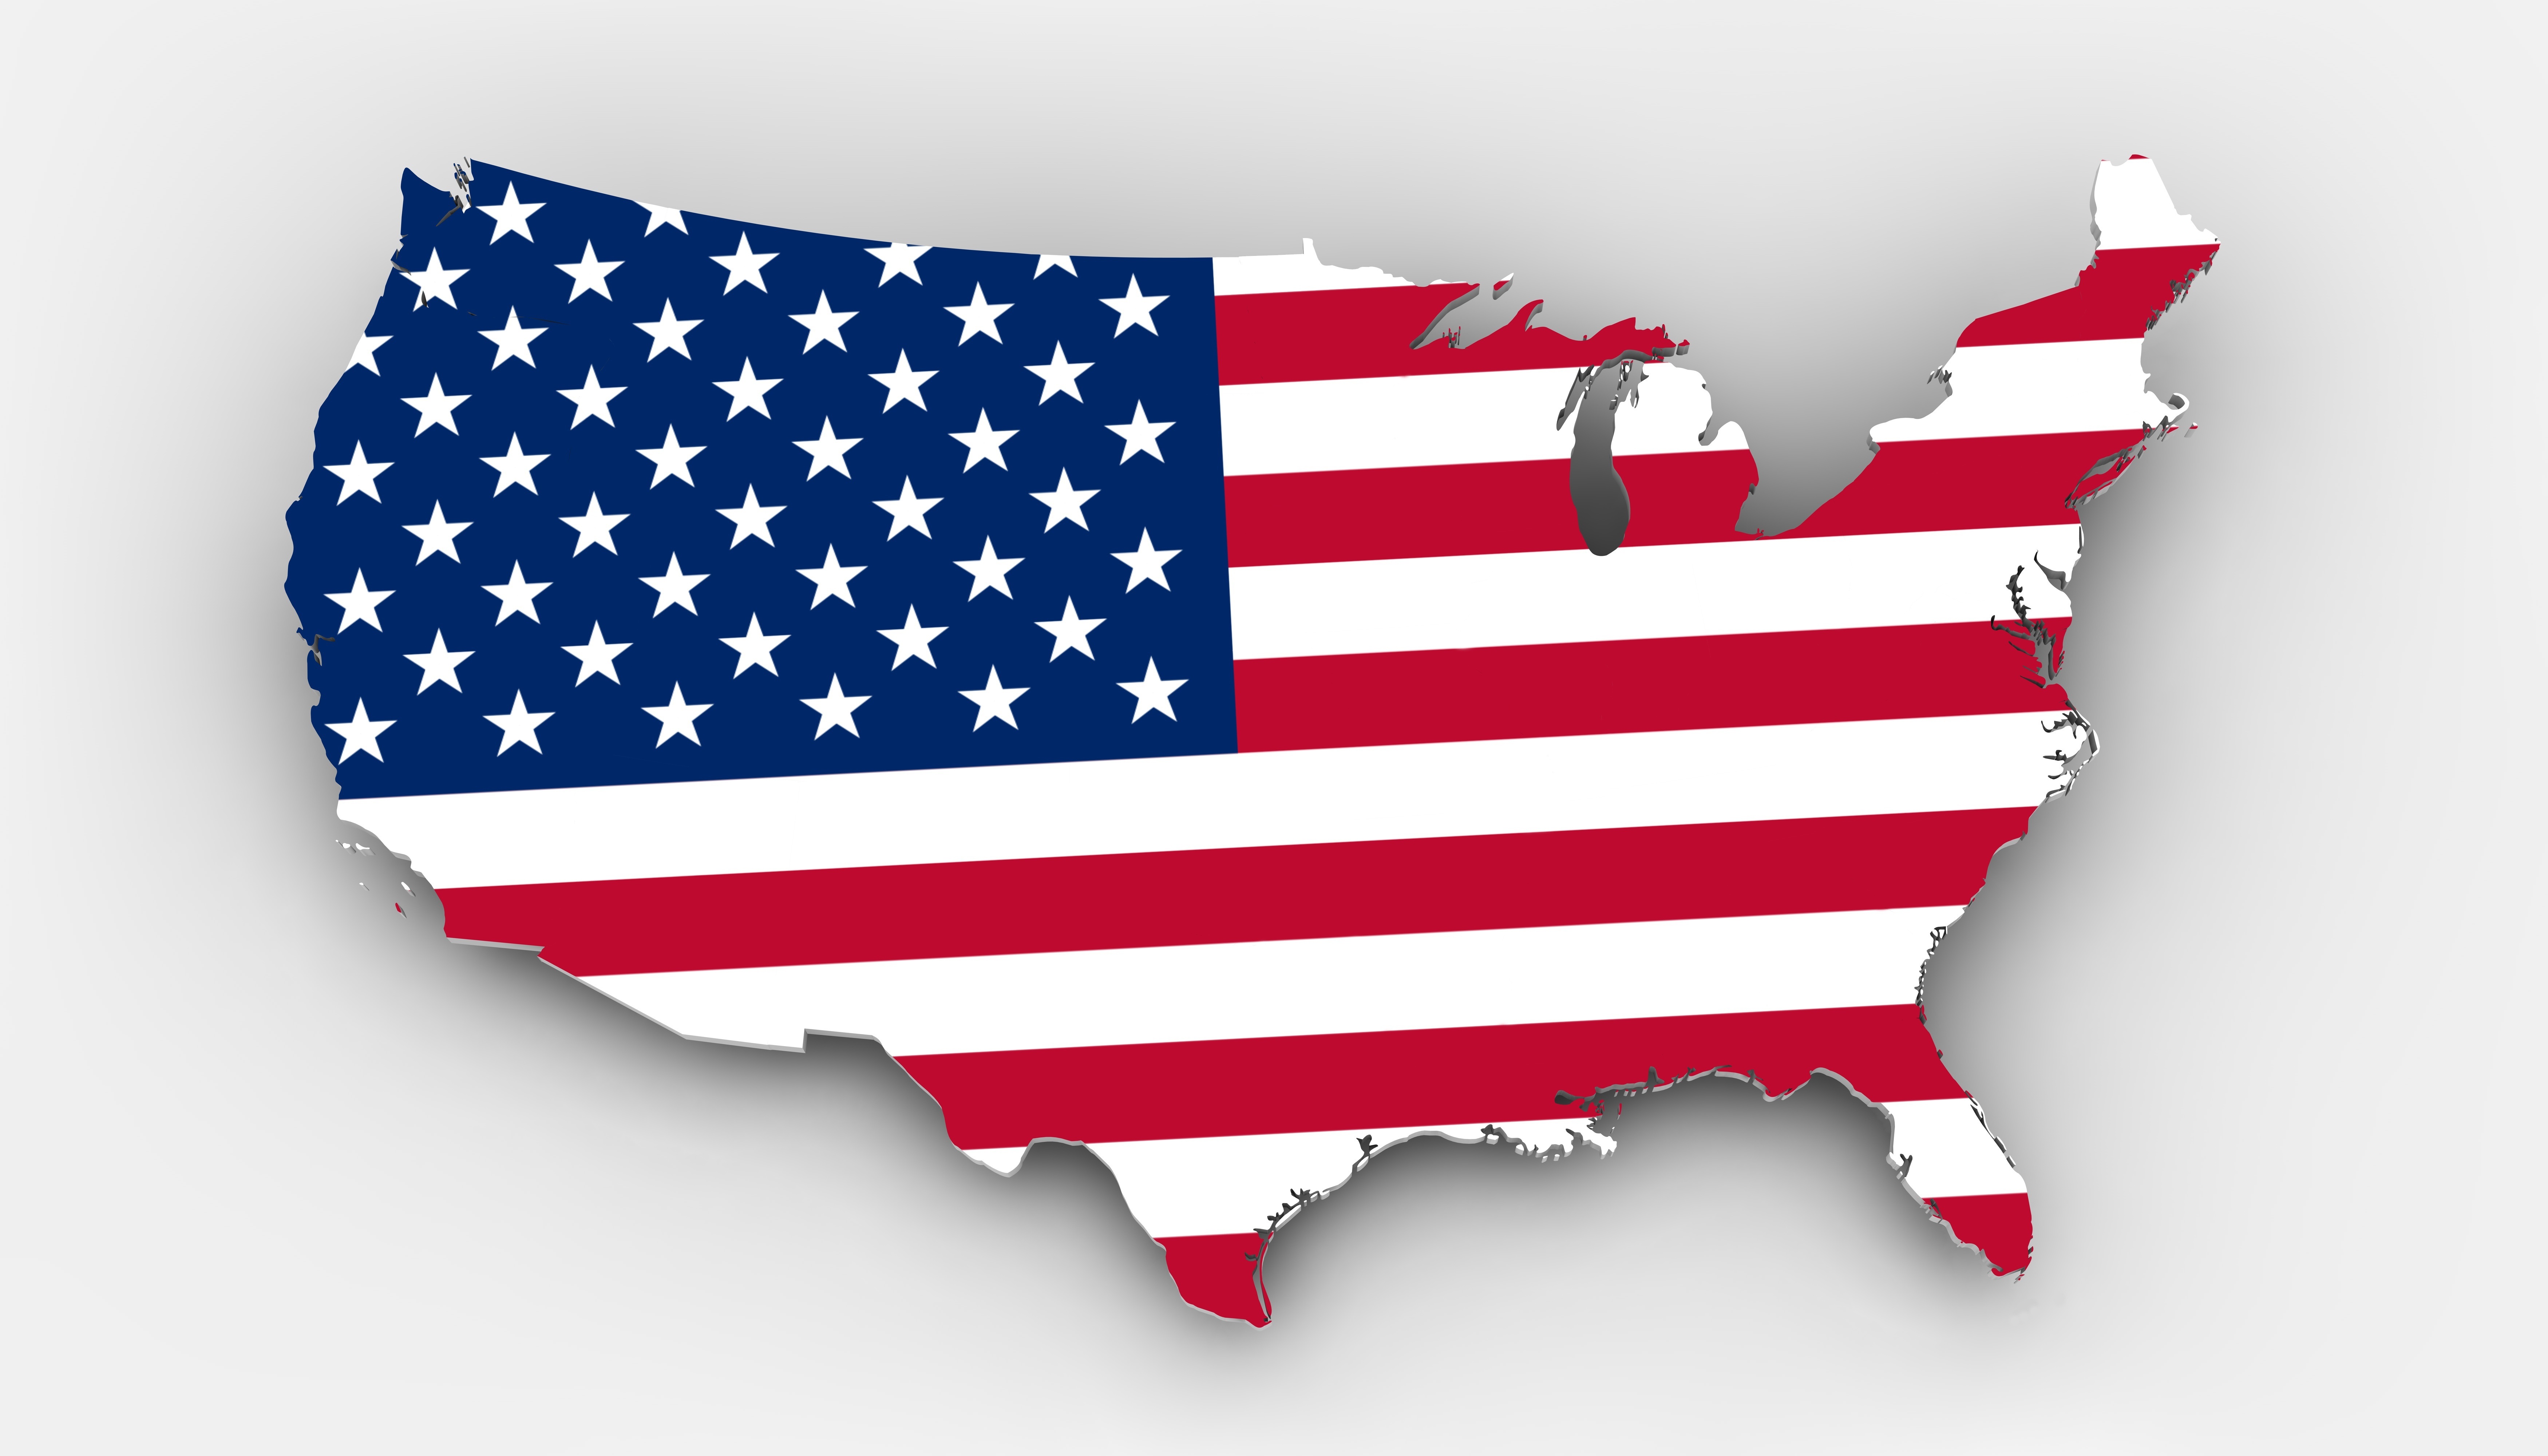 States of america. Территория Соединенных Штатов Америки. Юнайтед Стейтс оф Америка. Соединенные штаты Америки штаты. Флаг США на карте США.